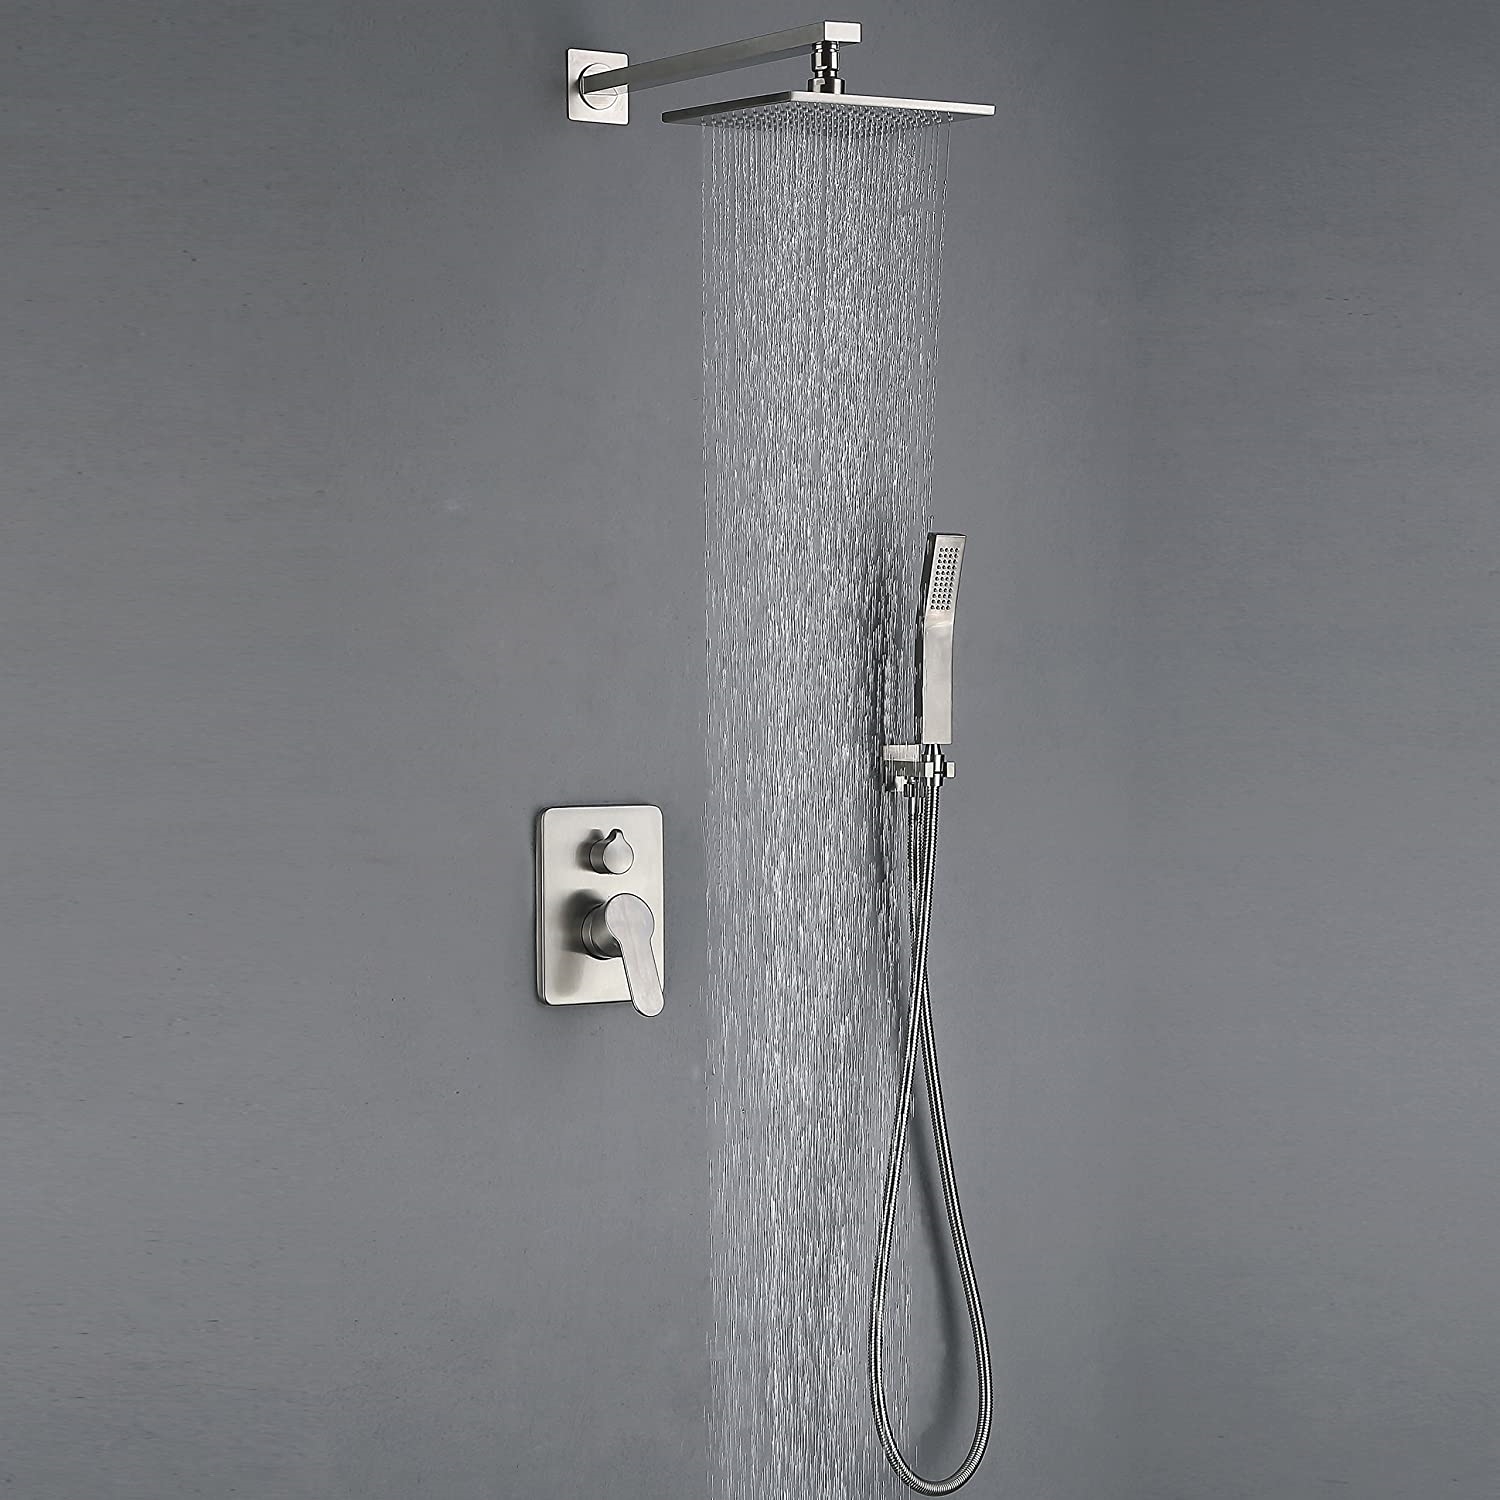 FontanaShowers Rain Shower Set Single Handle Thermostatic Valve Brushed Nickel Wall Mount Shower With Handshower